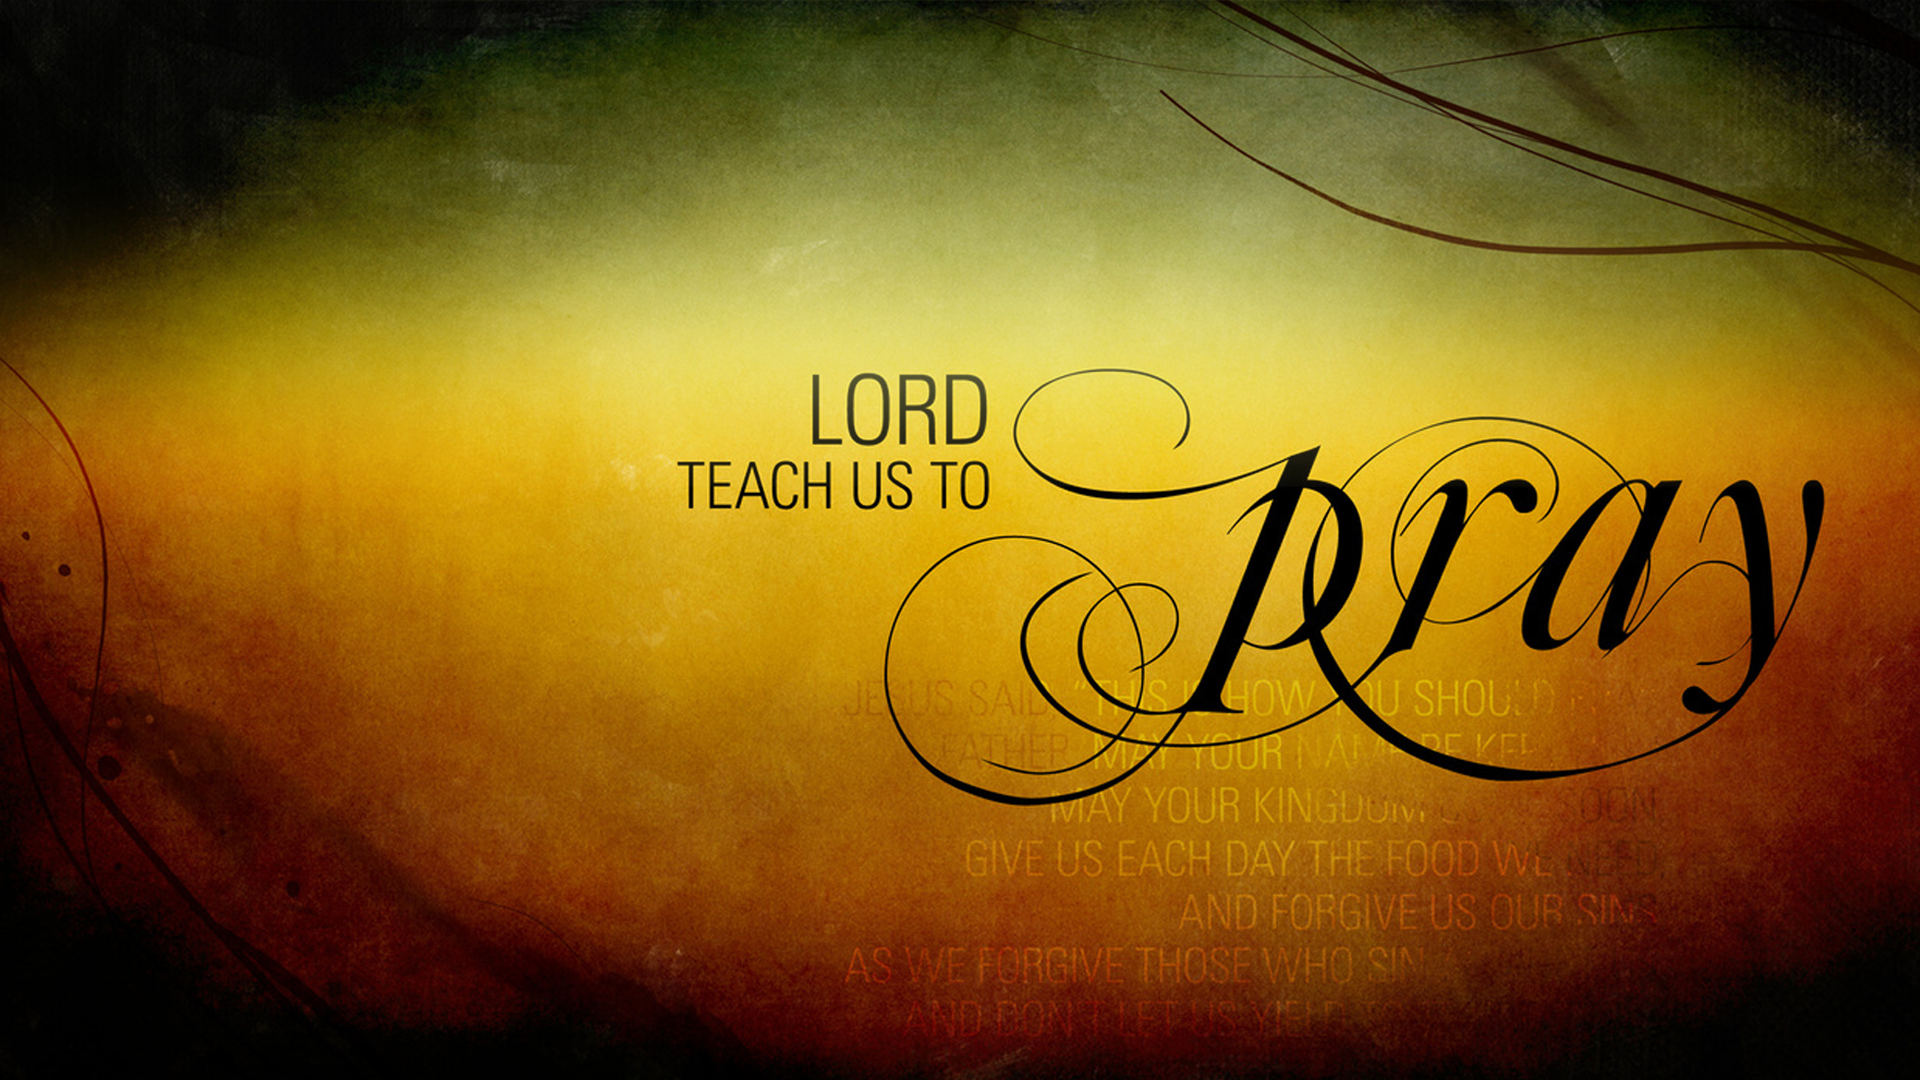 Lord teach us how to pray